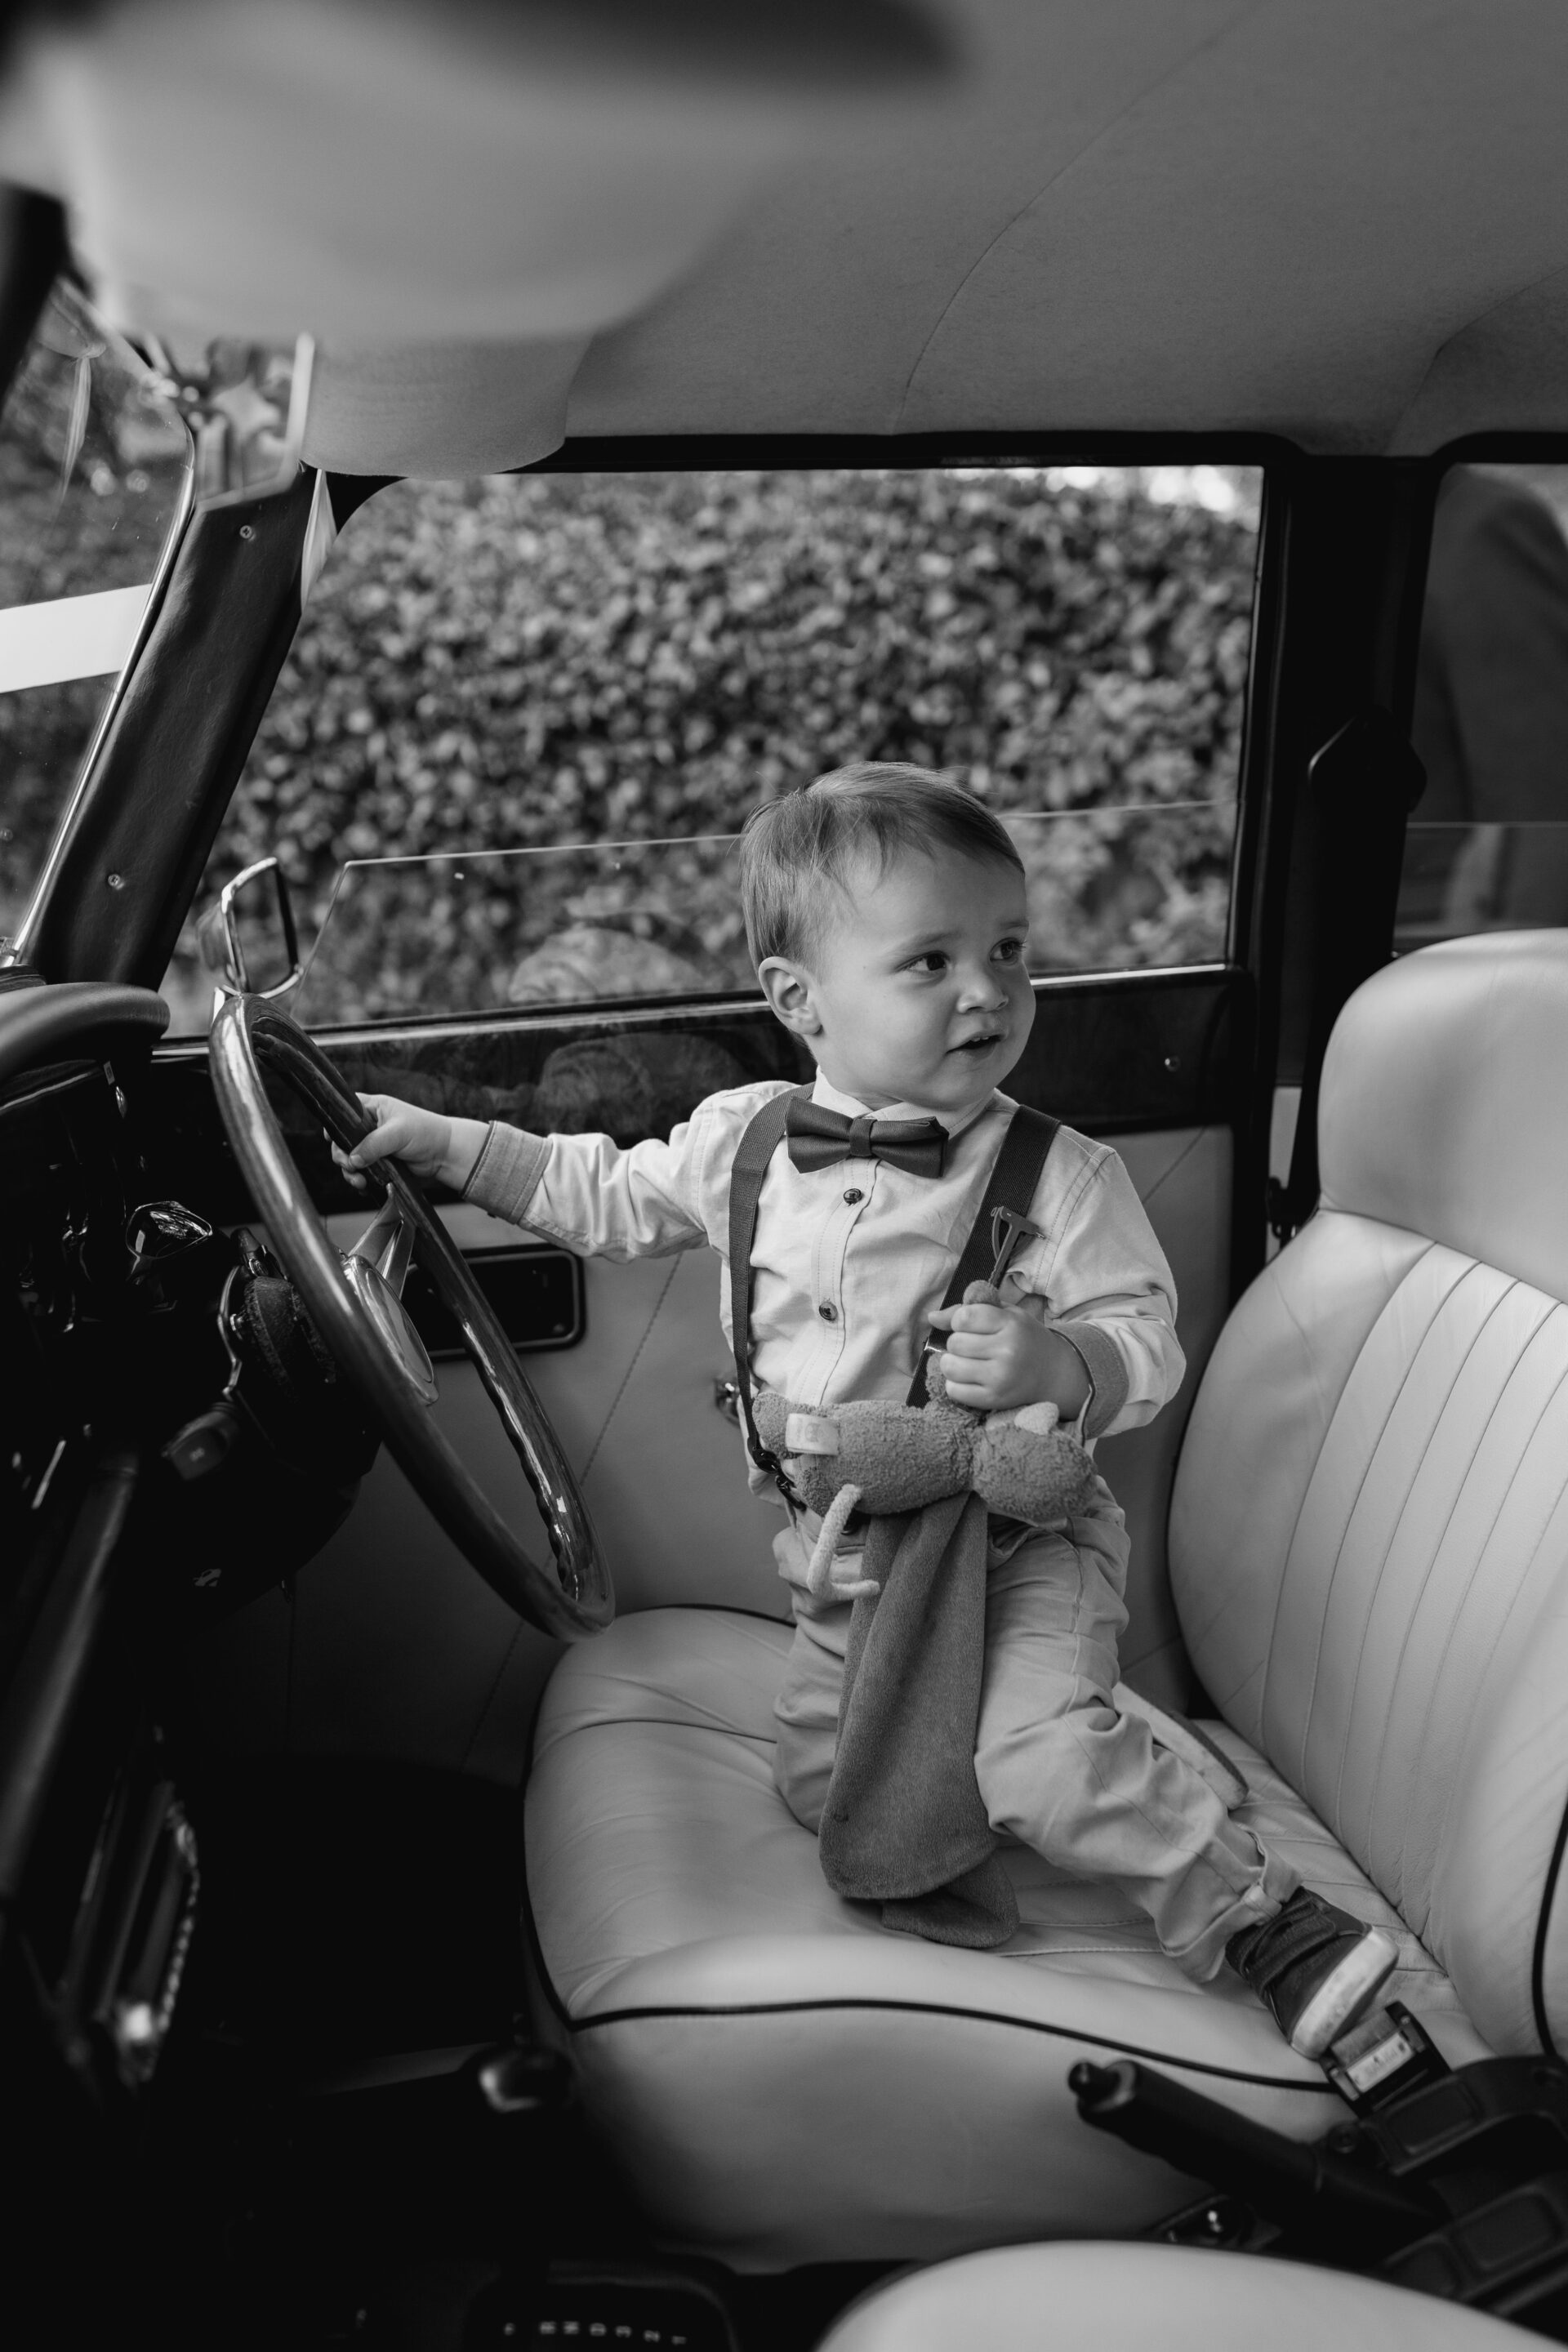 A young wedding guest enjoys exploring the vintage wedding car